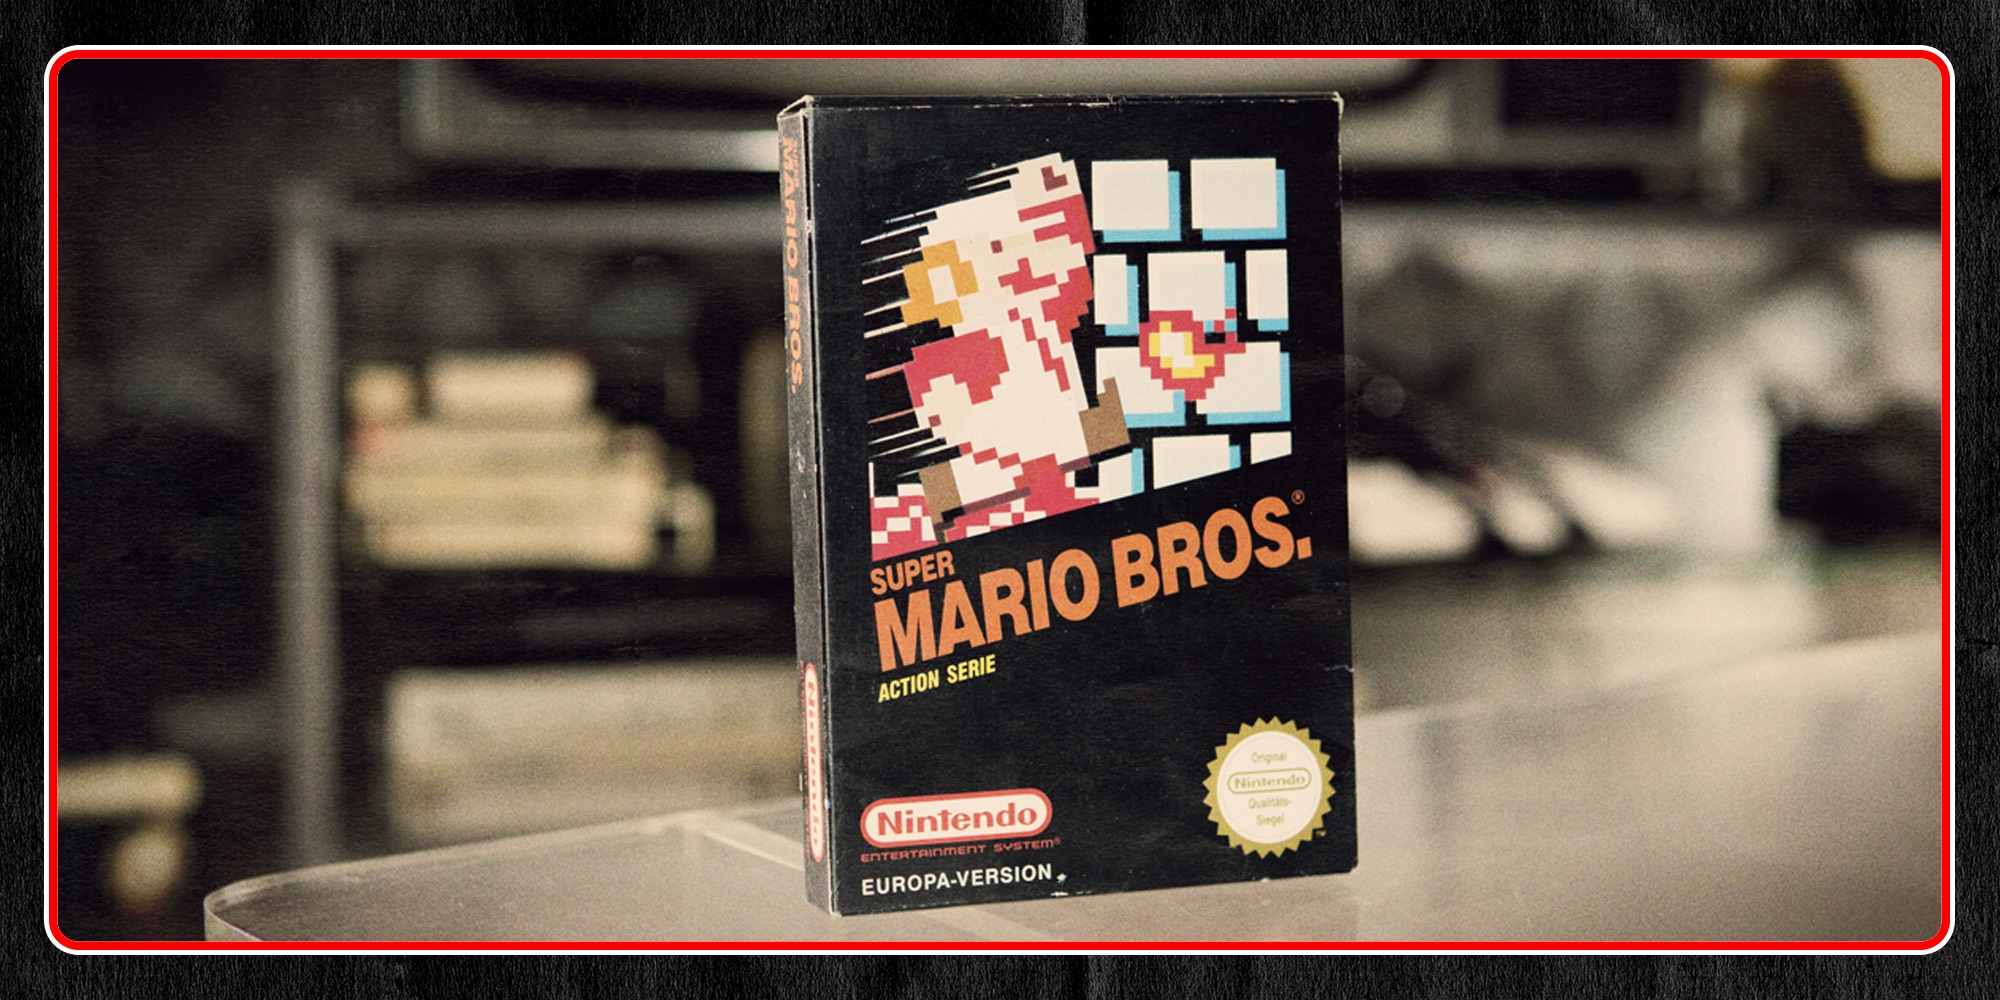 Nintendo Classic Mini: intervista speciale sul NES – Parte 3: Super Mario Bros.